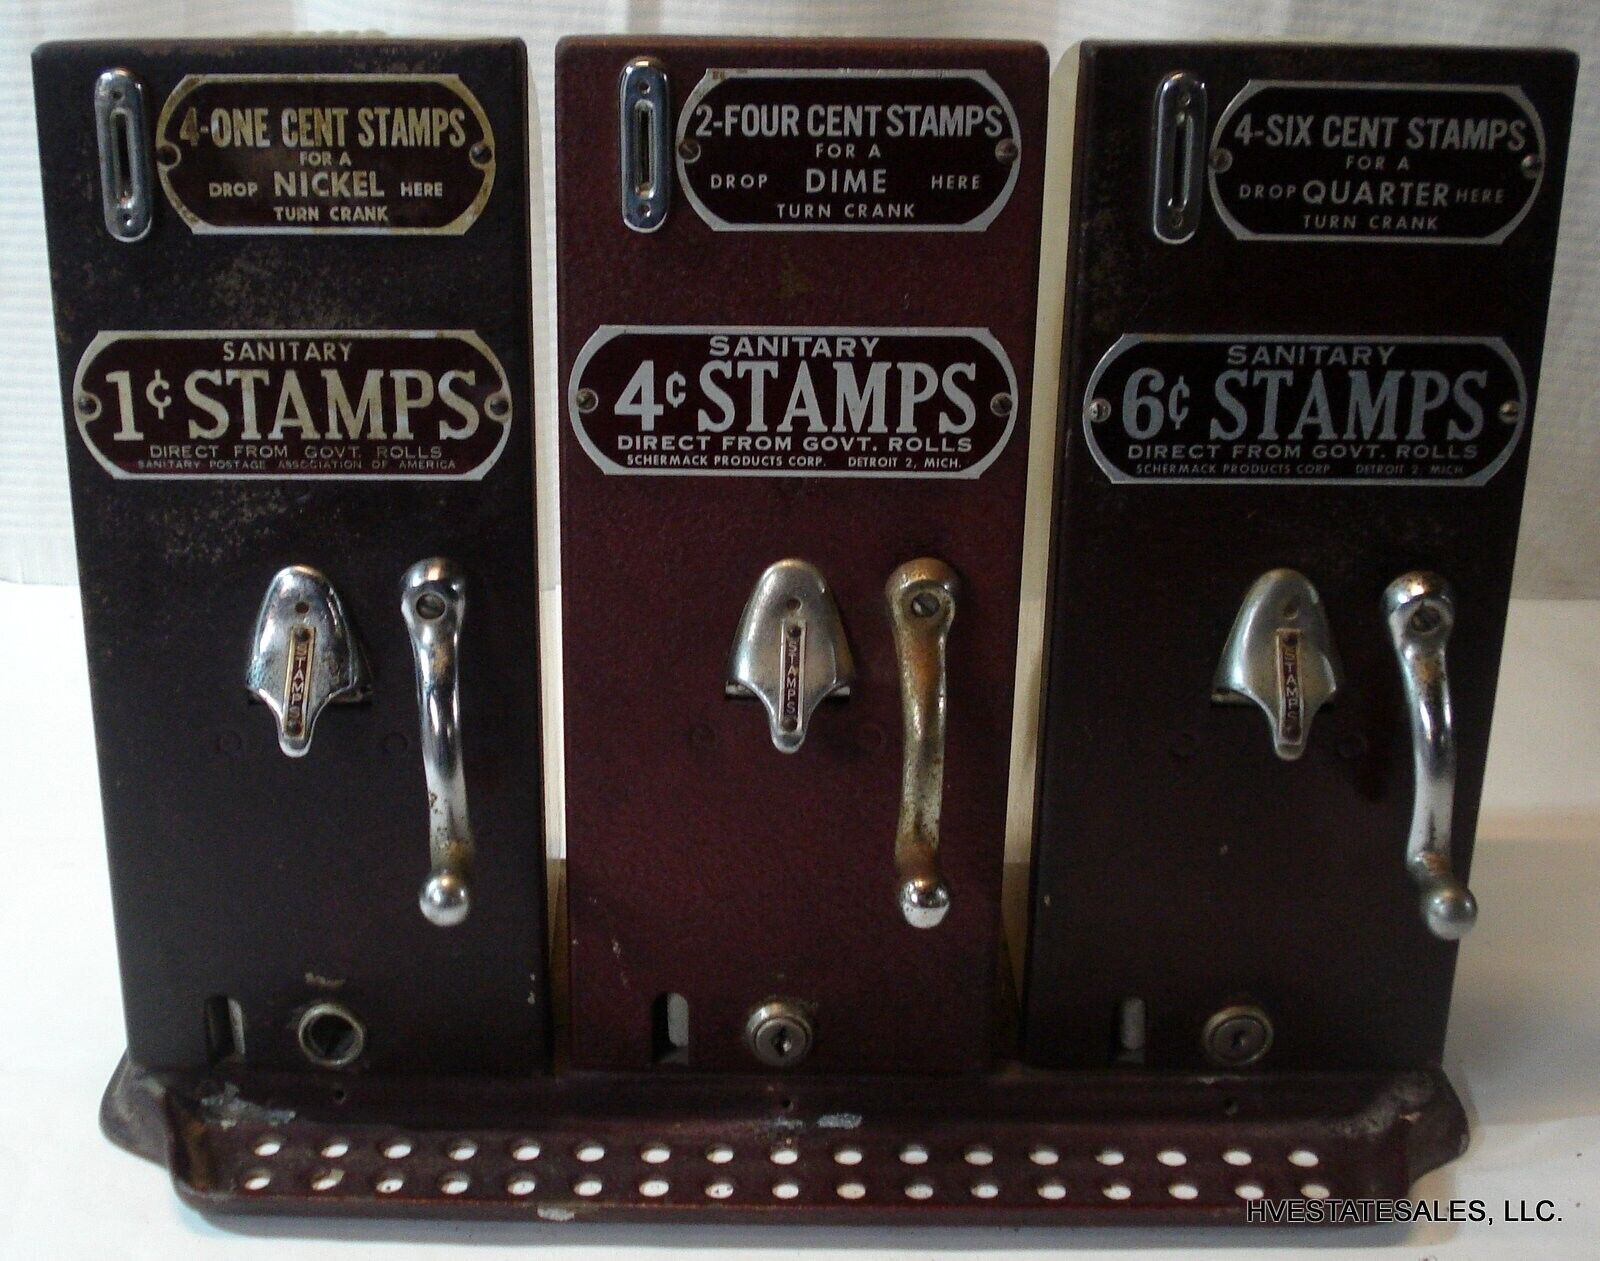 Vintage Schermack Stamp Machine - 1950's Counter Top Model